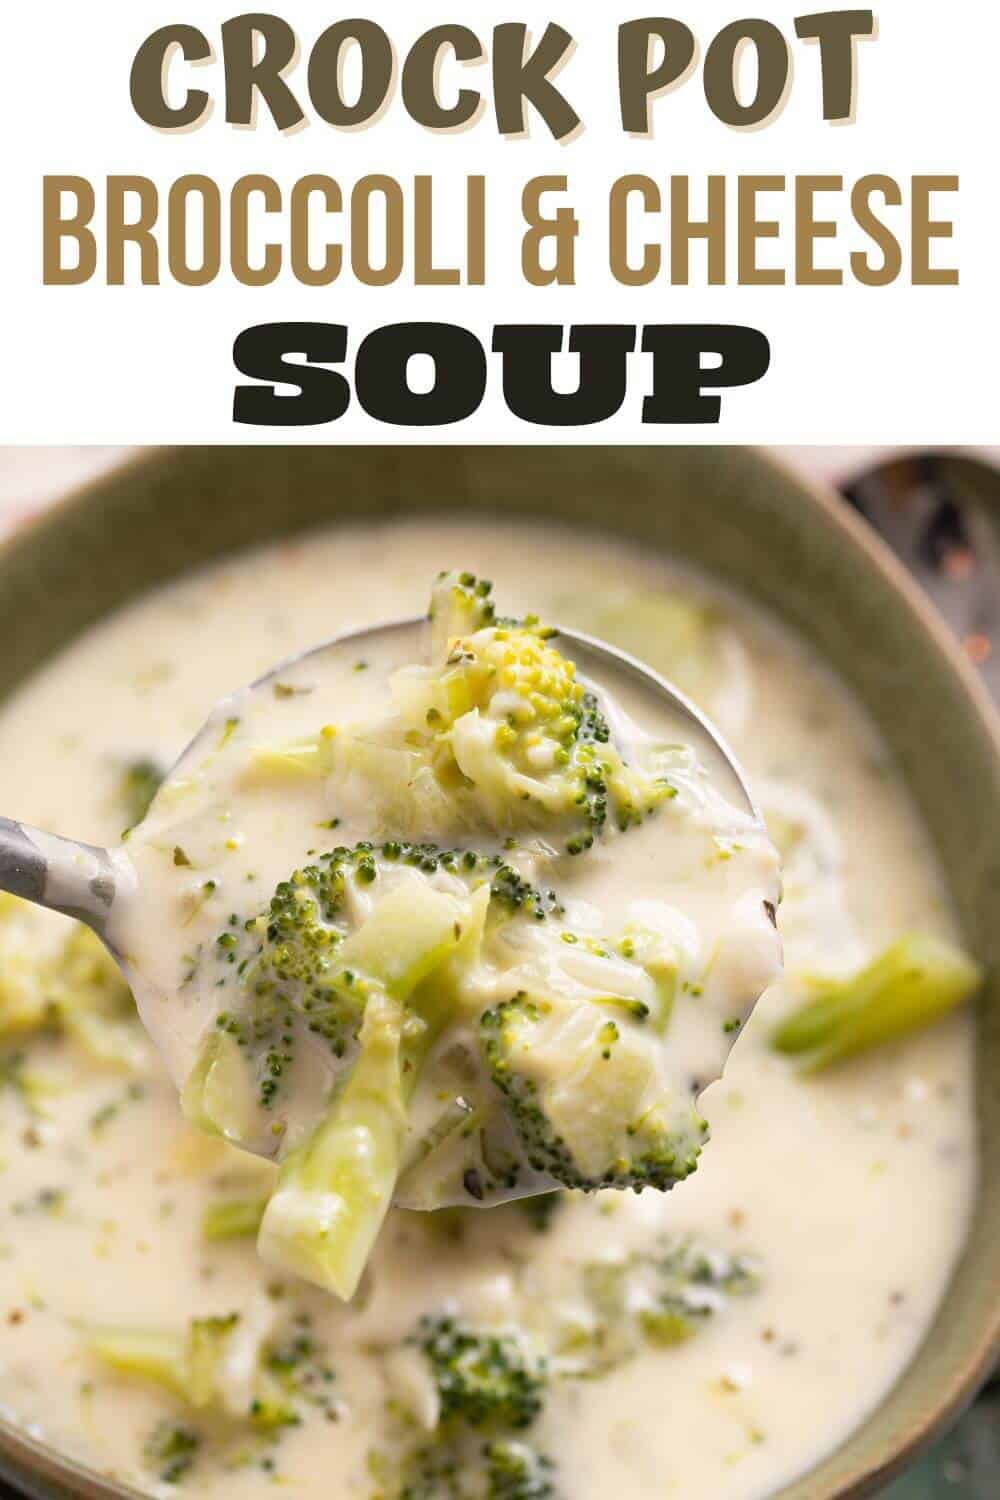 Crock pot broccoli and cheese soup.